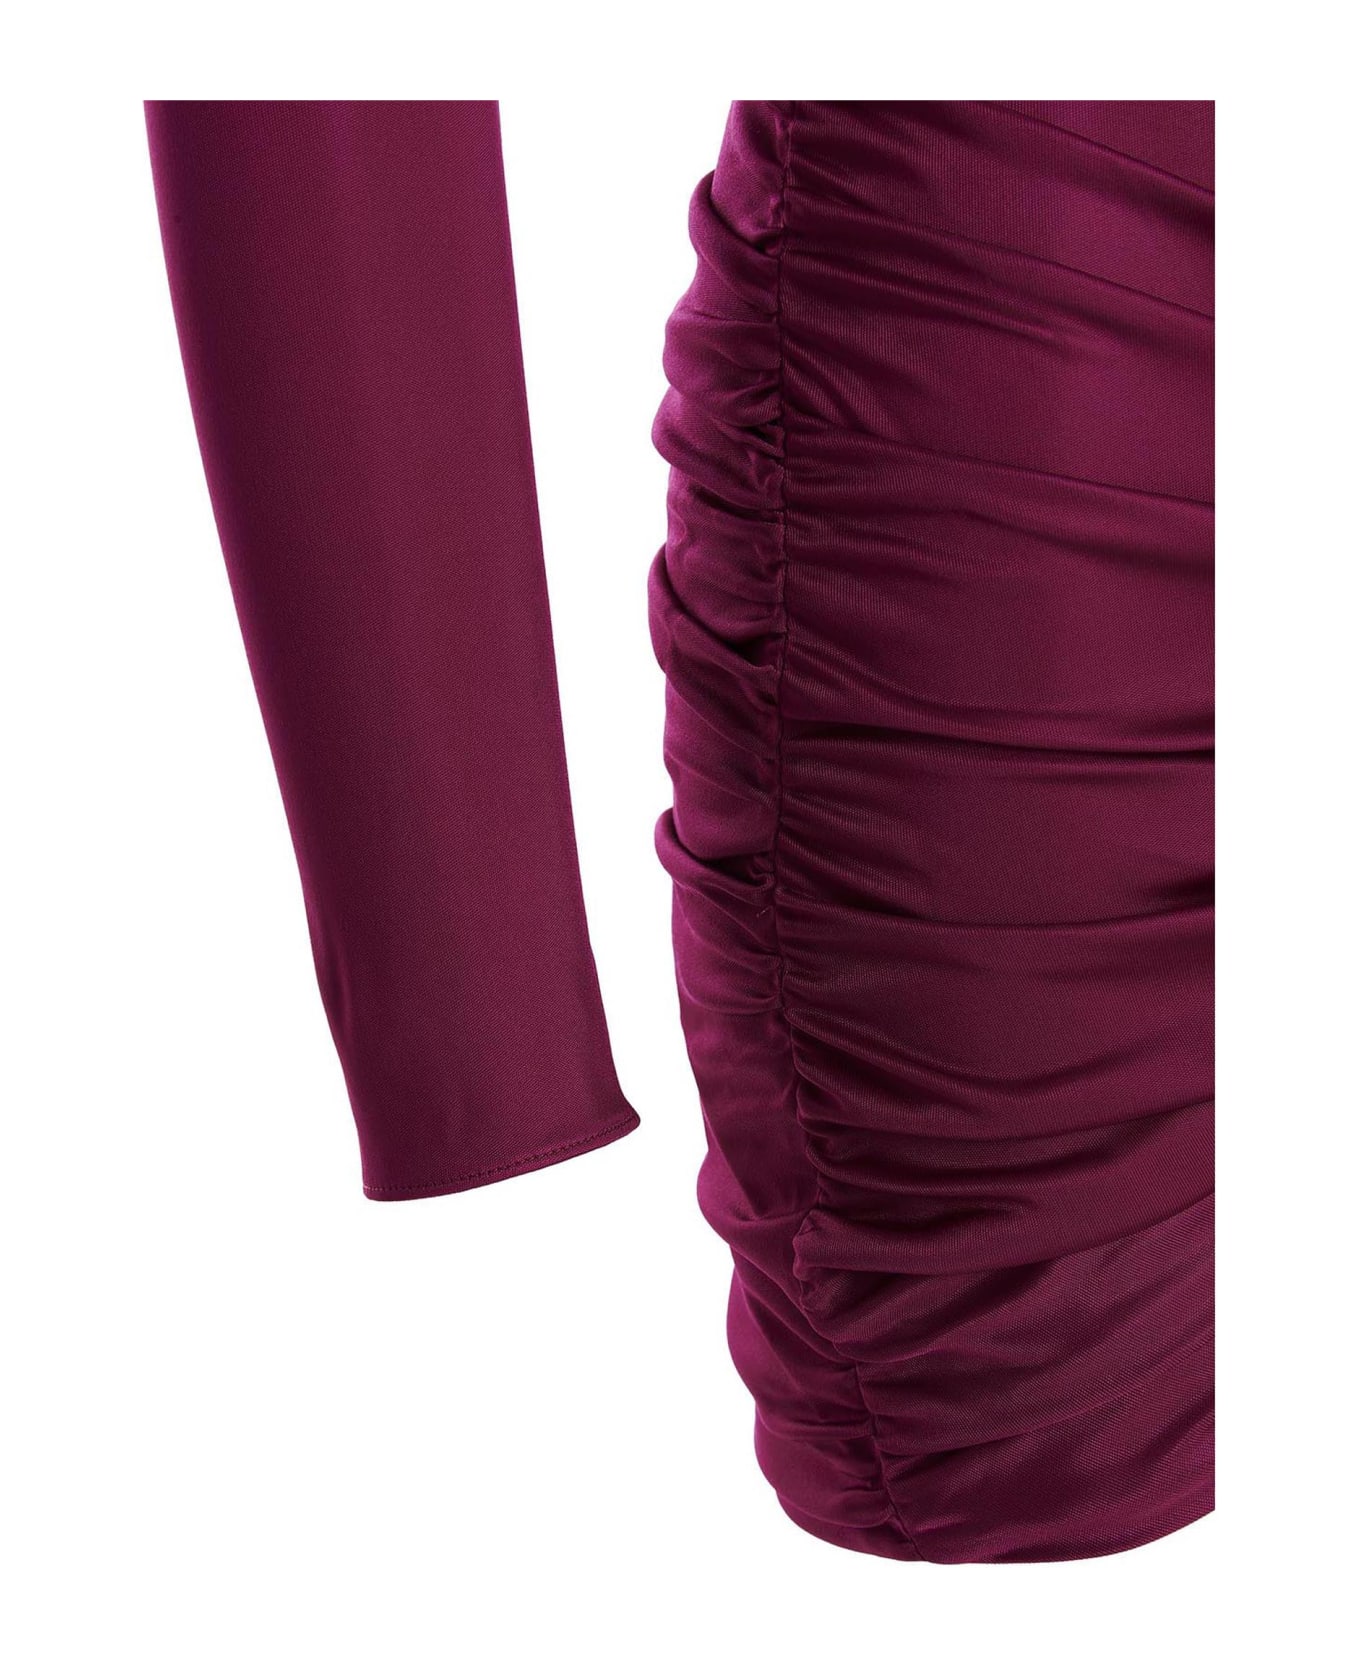 Saint Laurent Draped Dress - Fuchsia